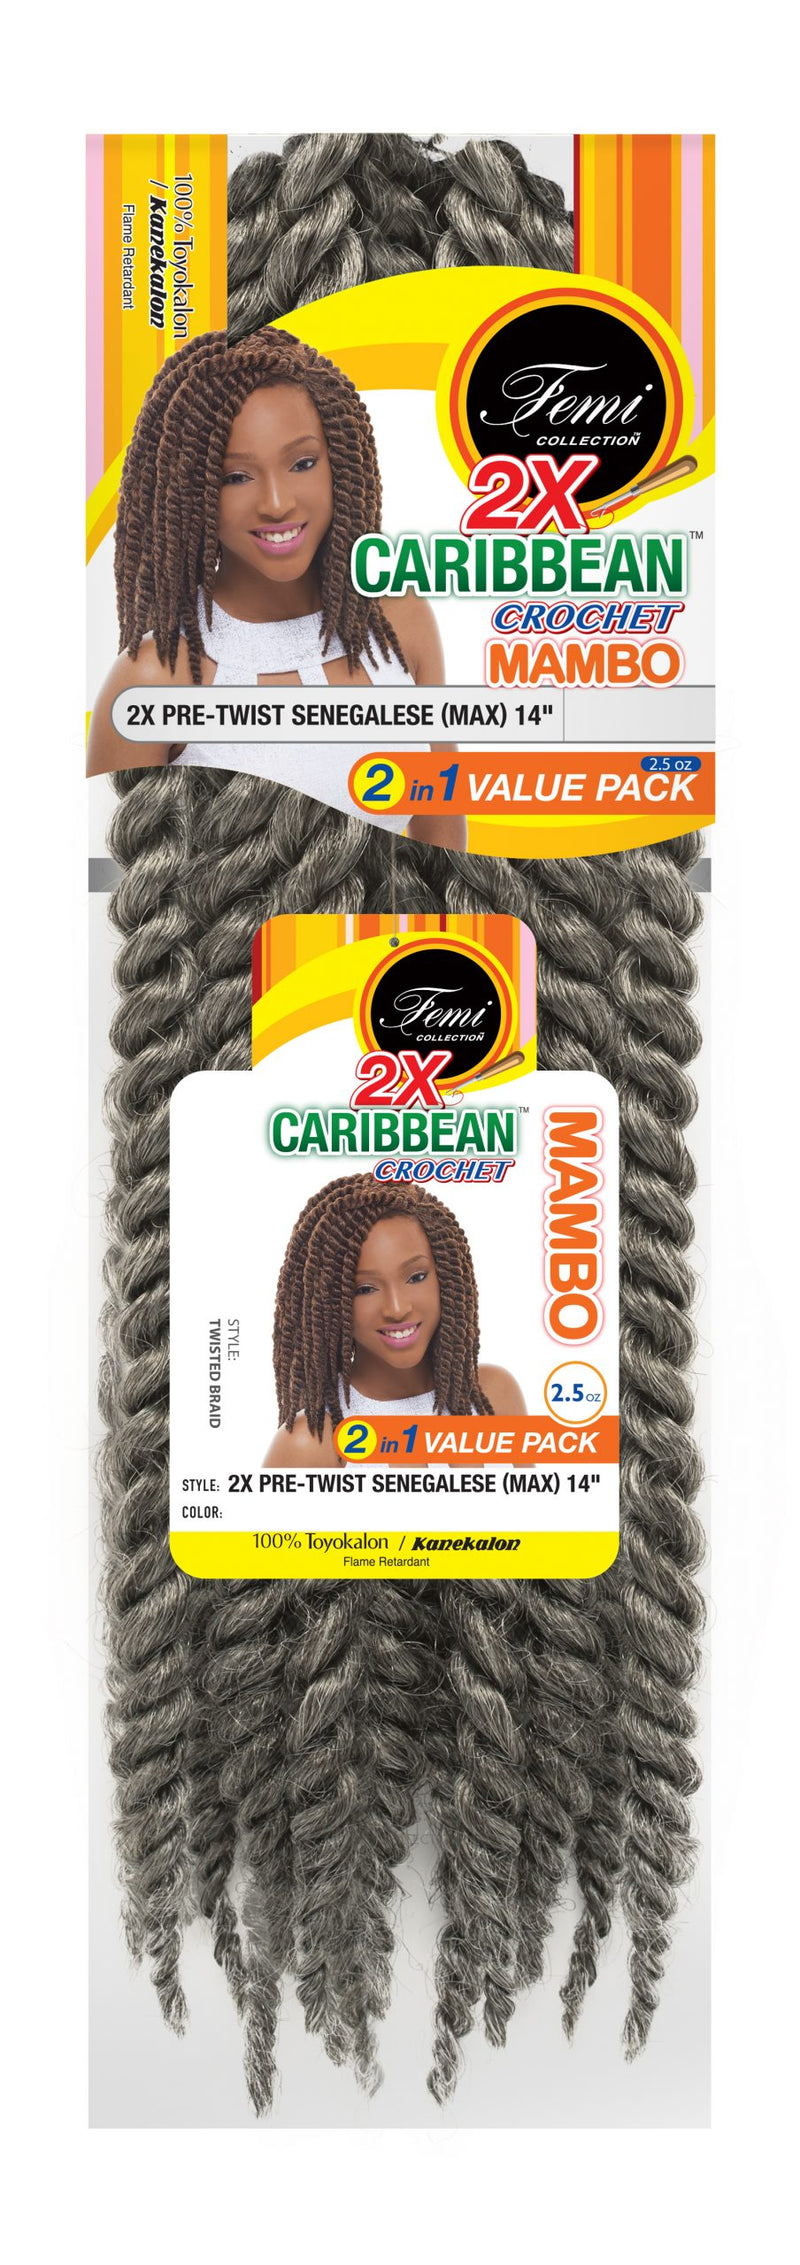 Jamaican Curl Kanekalon and Toyokalon Crochet Braid Hair by